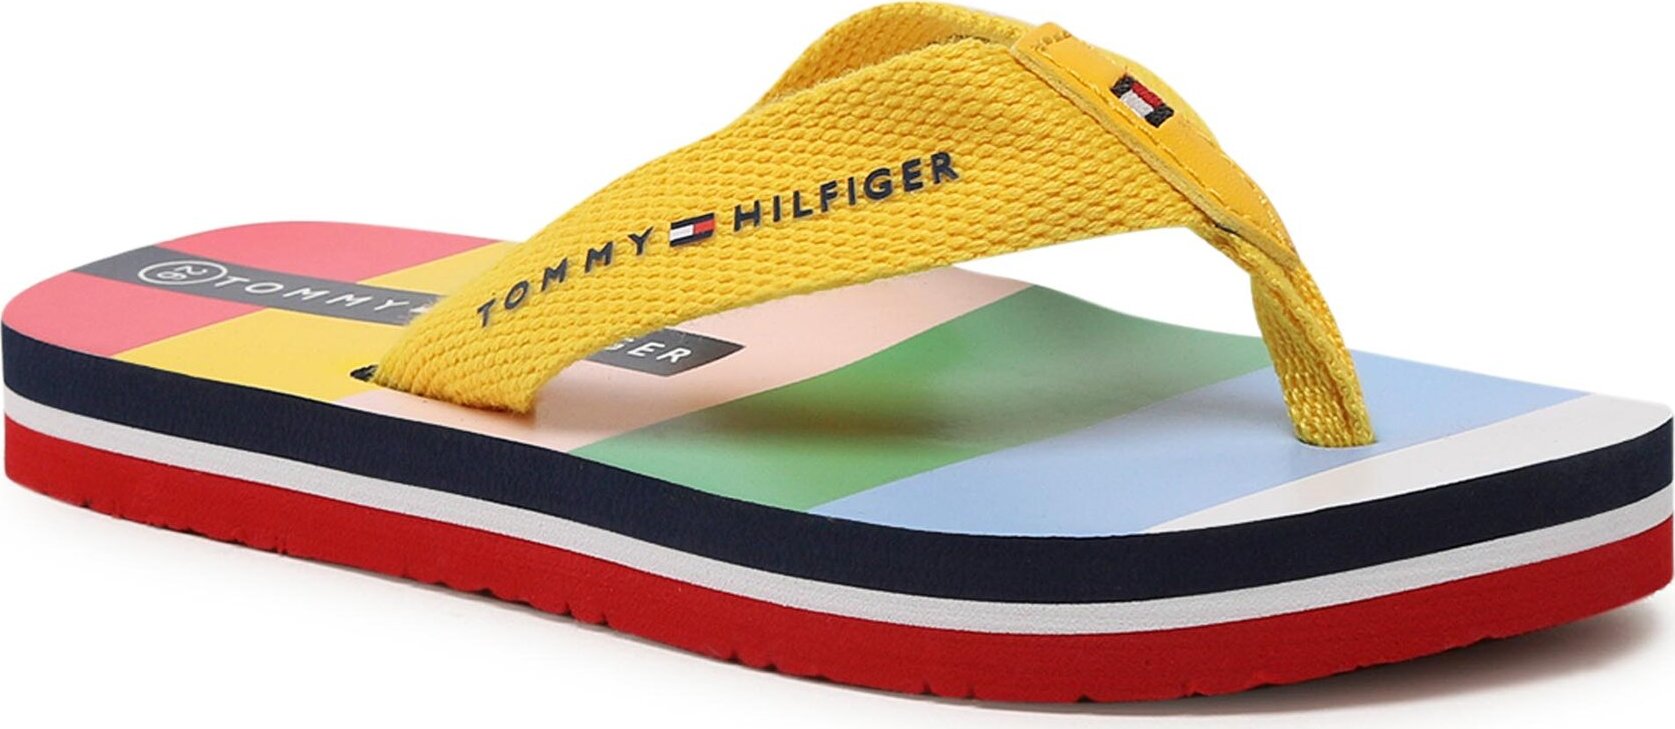 Žabky Tommy Hilfiger Multicolor Flip Flop T3X8-32922-0058 M Yellow 200